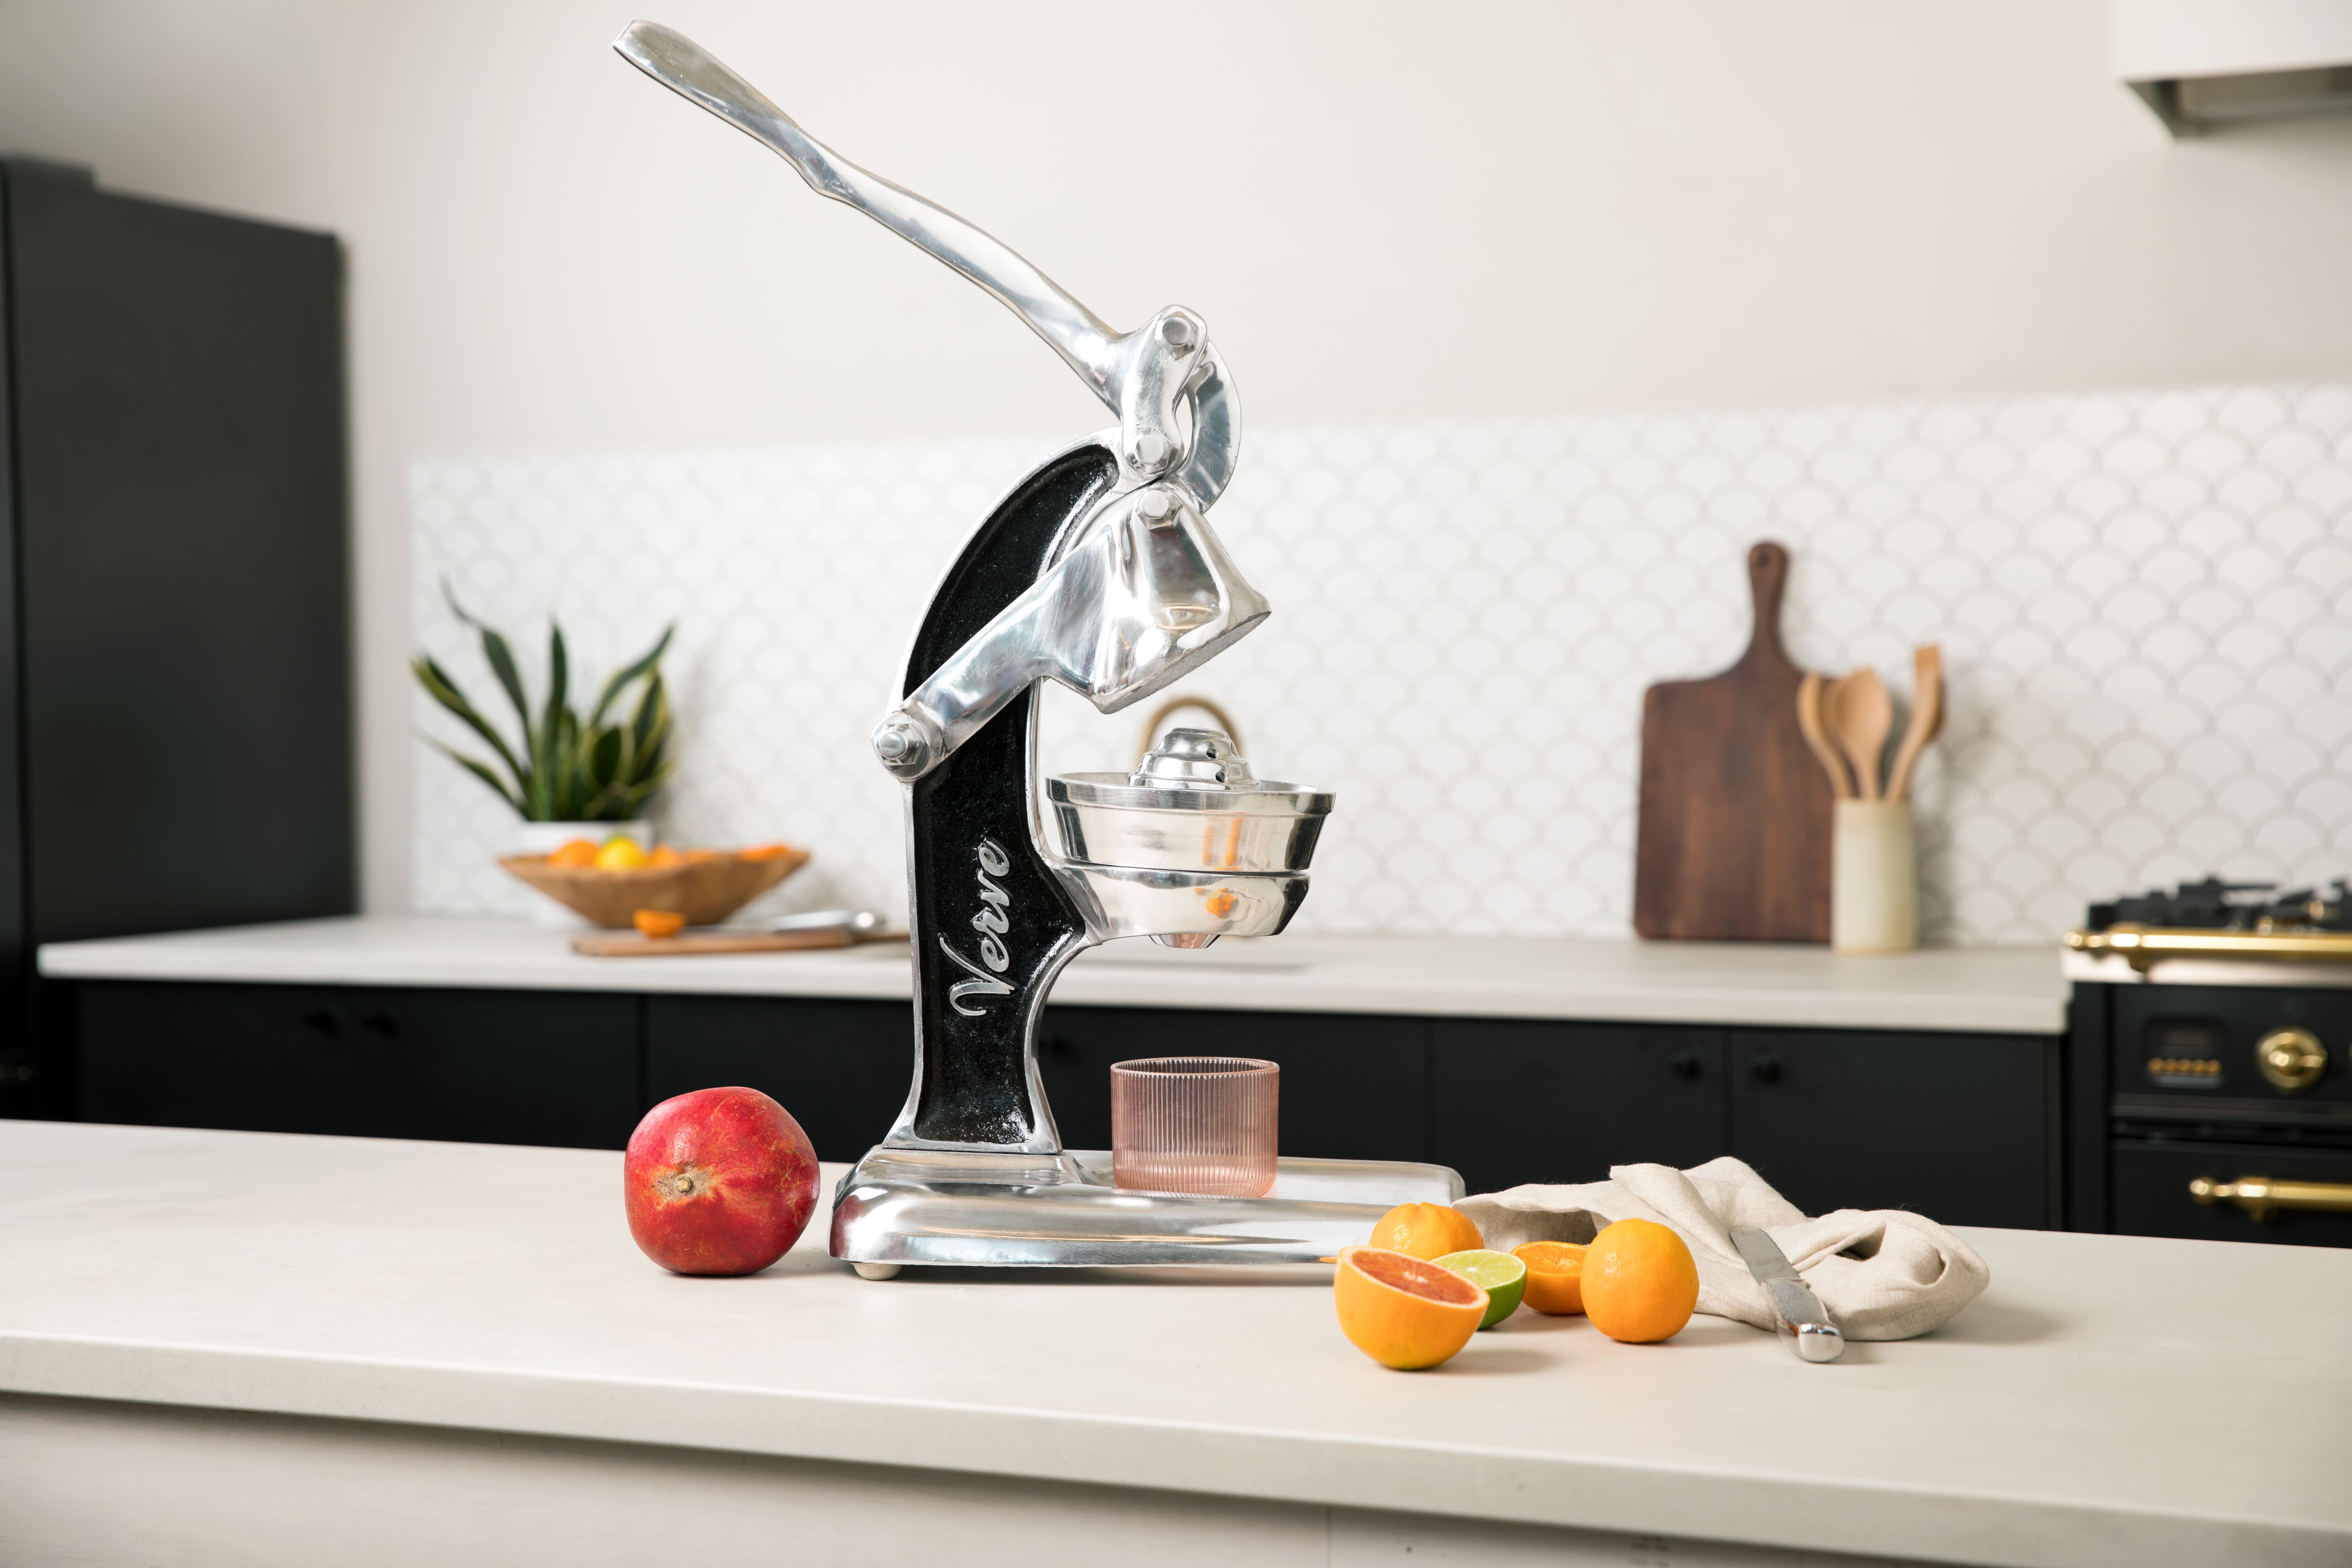 Buy hand blender juice manual fruit juicer Supplies Wholesale For Your  Business 